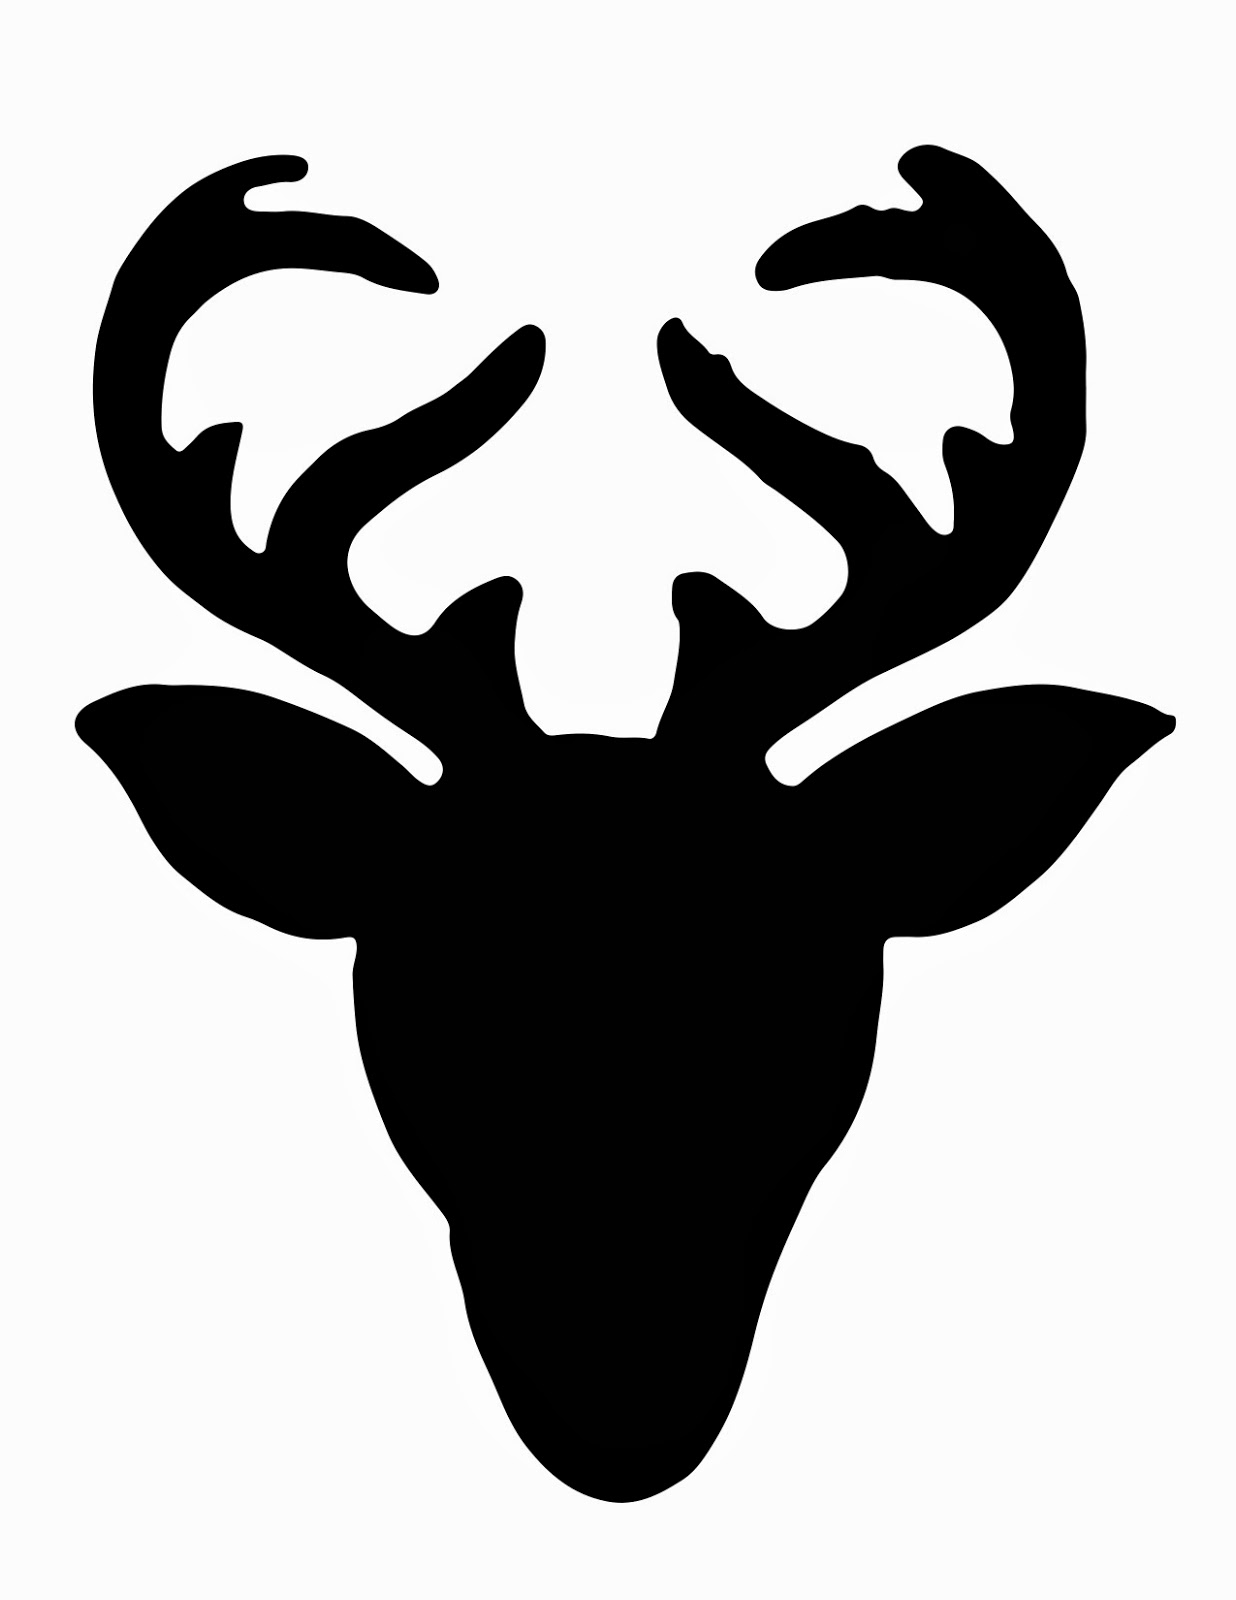 free deer head silhouette clip art - photo #7